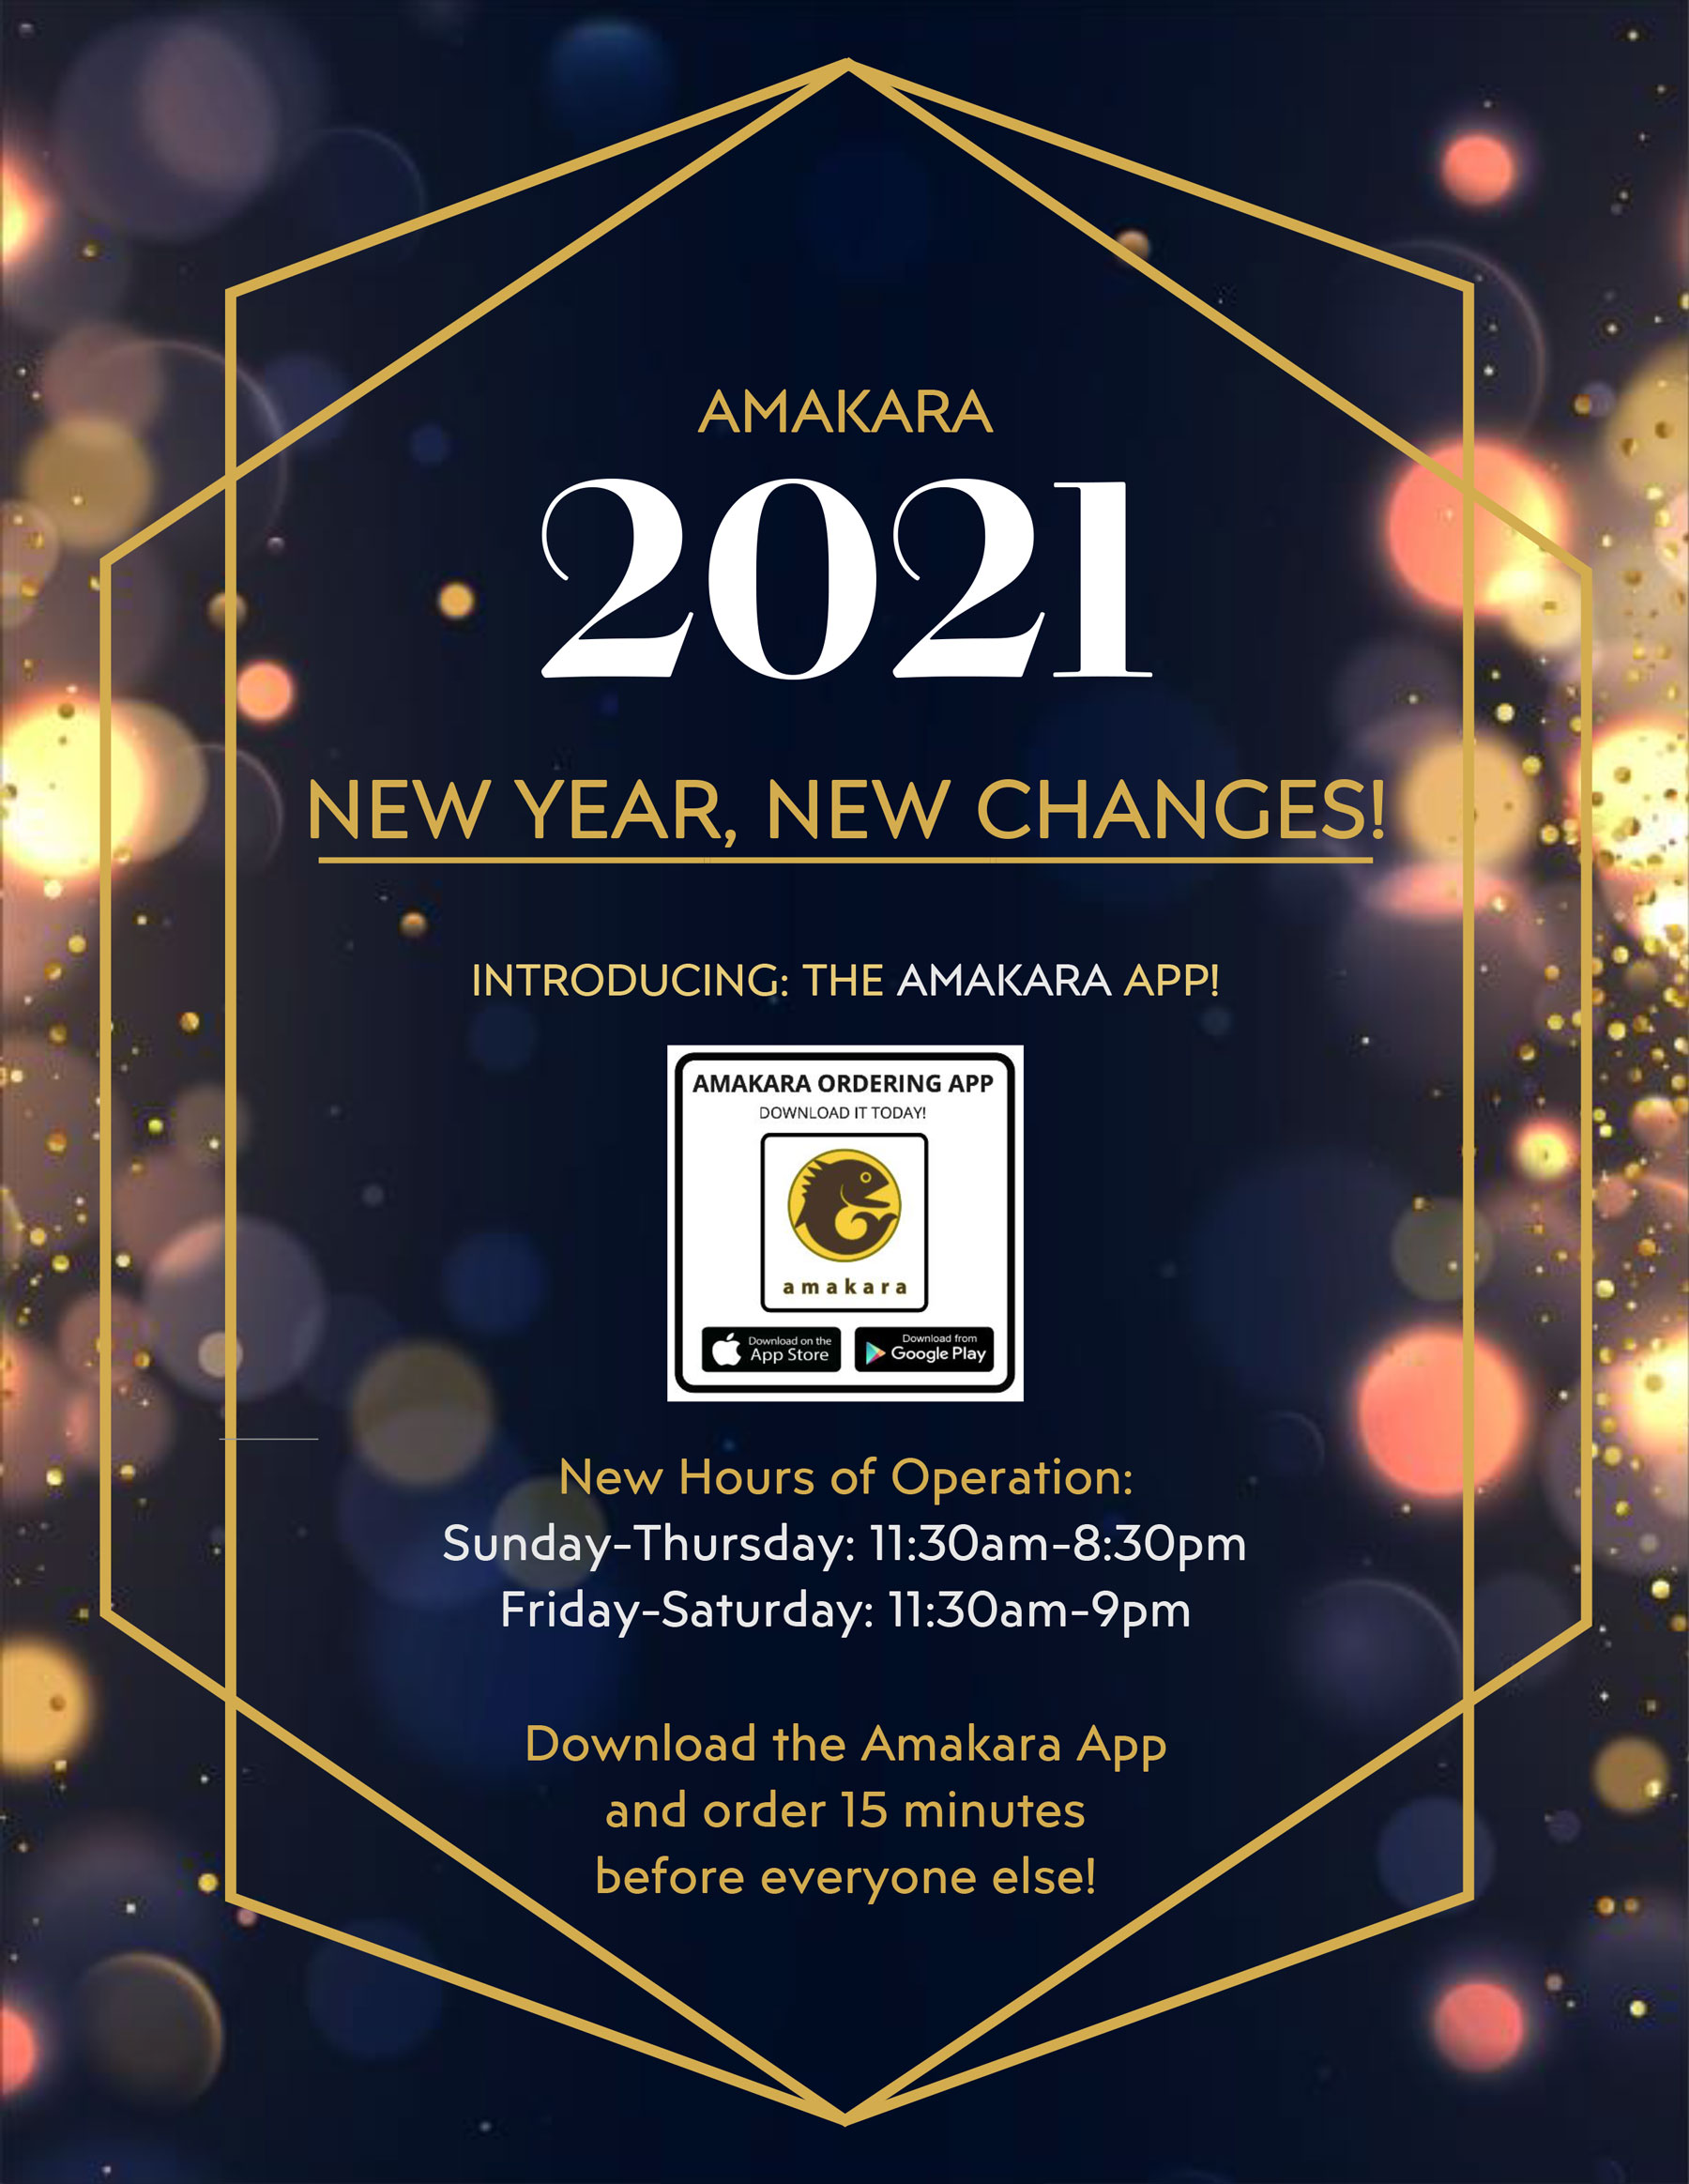 Amakara 2021 - New Year, New Changes